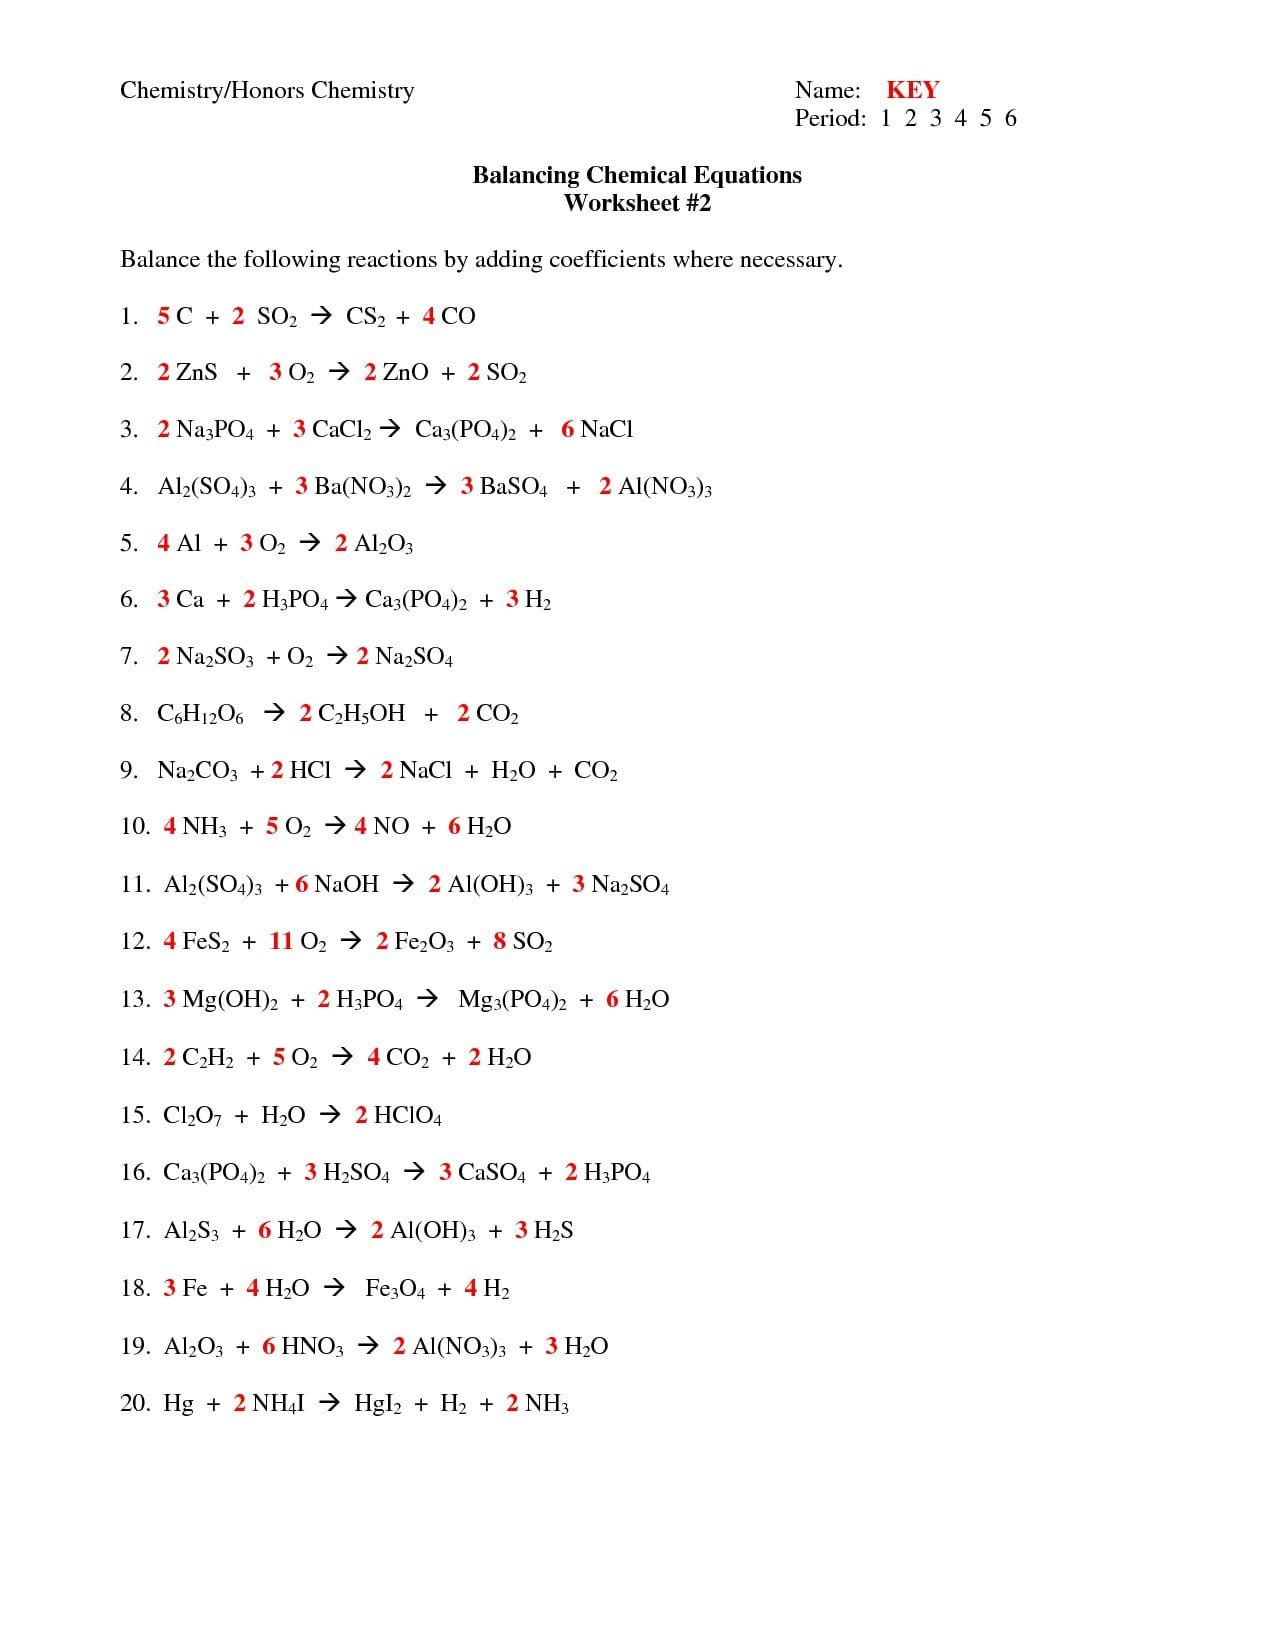 Chapter 7 Worksheet 1 Balancing Chemical Equations Algebra 1 Together With Chapter 7 Worksheet 1 Balancing Chemical Equations Answers